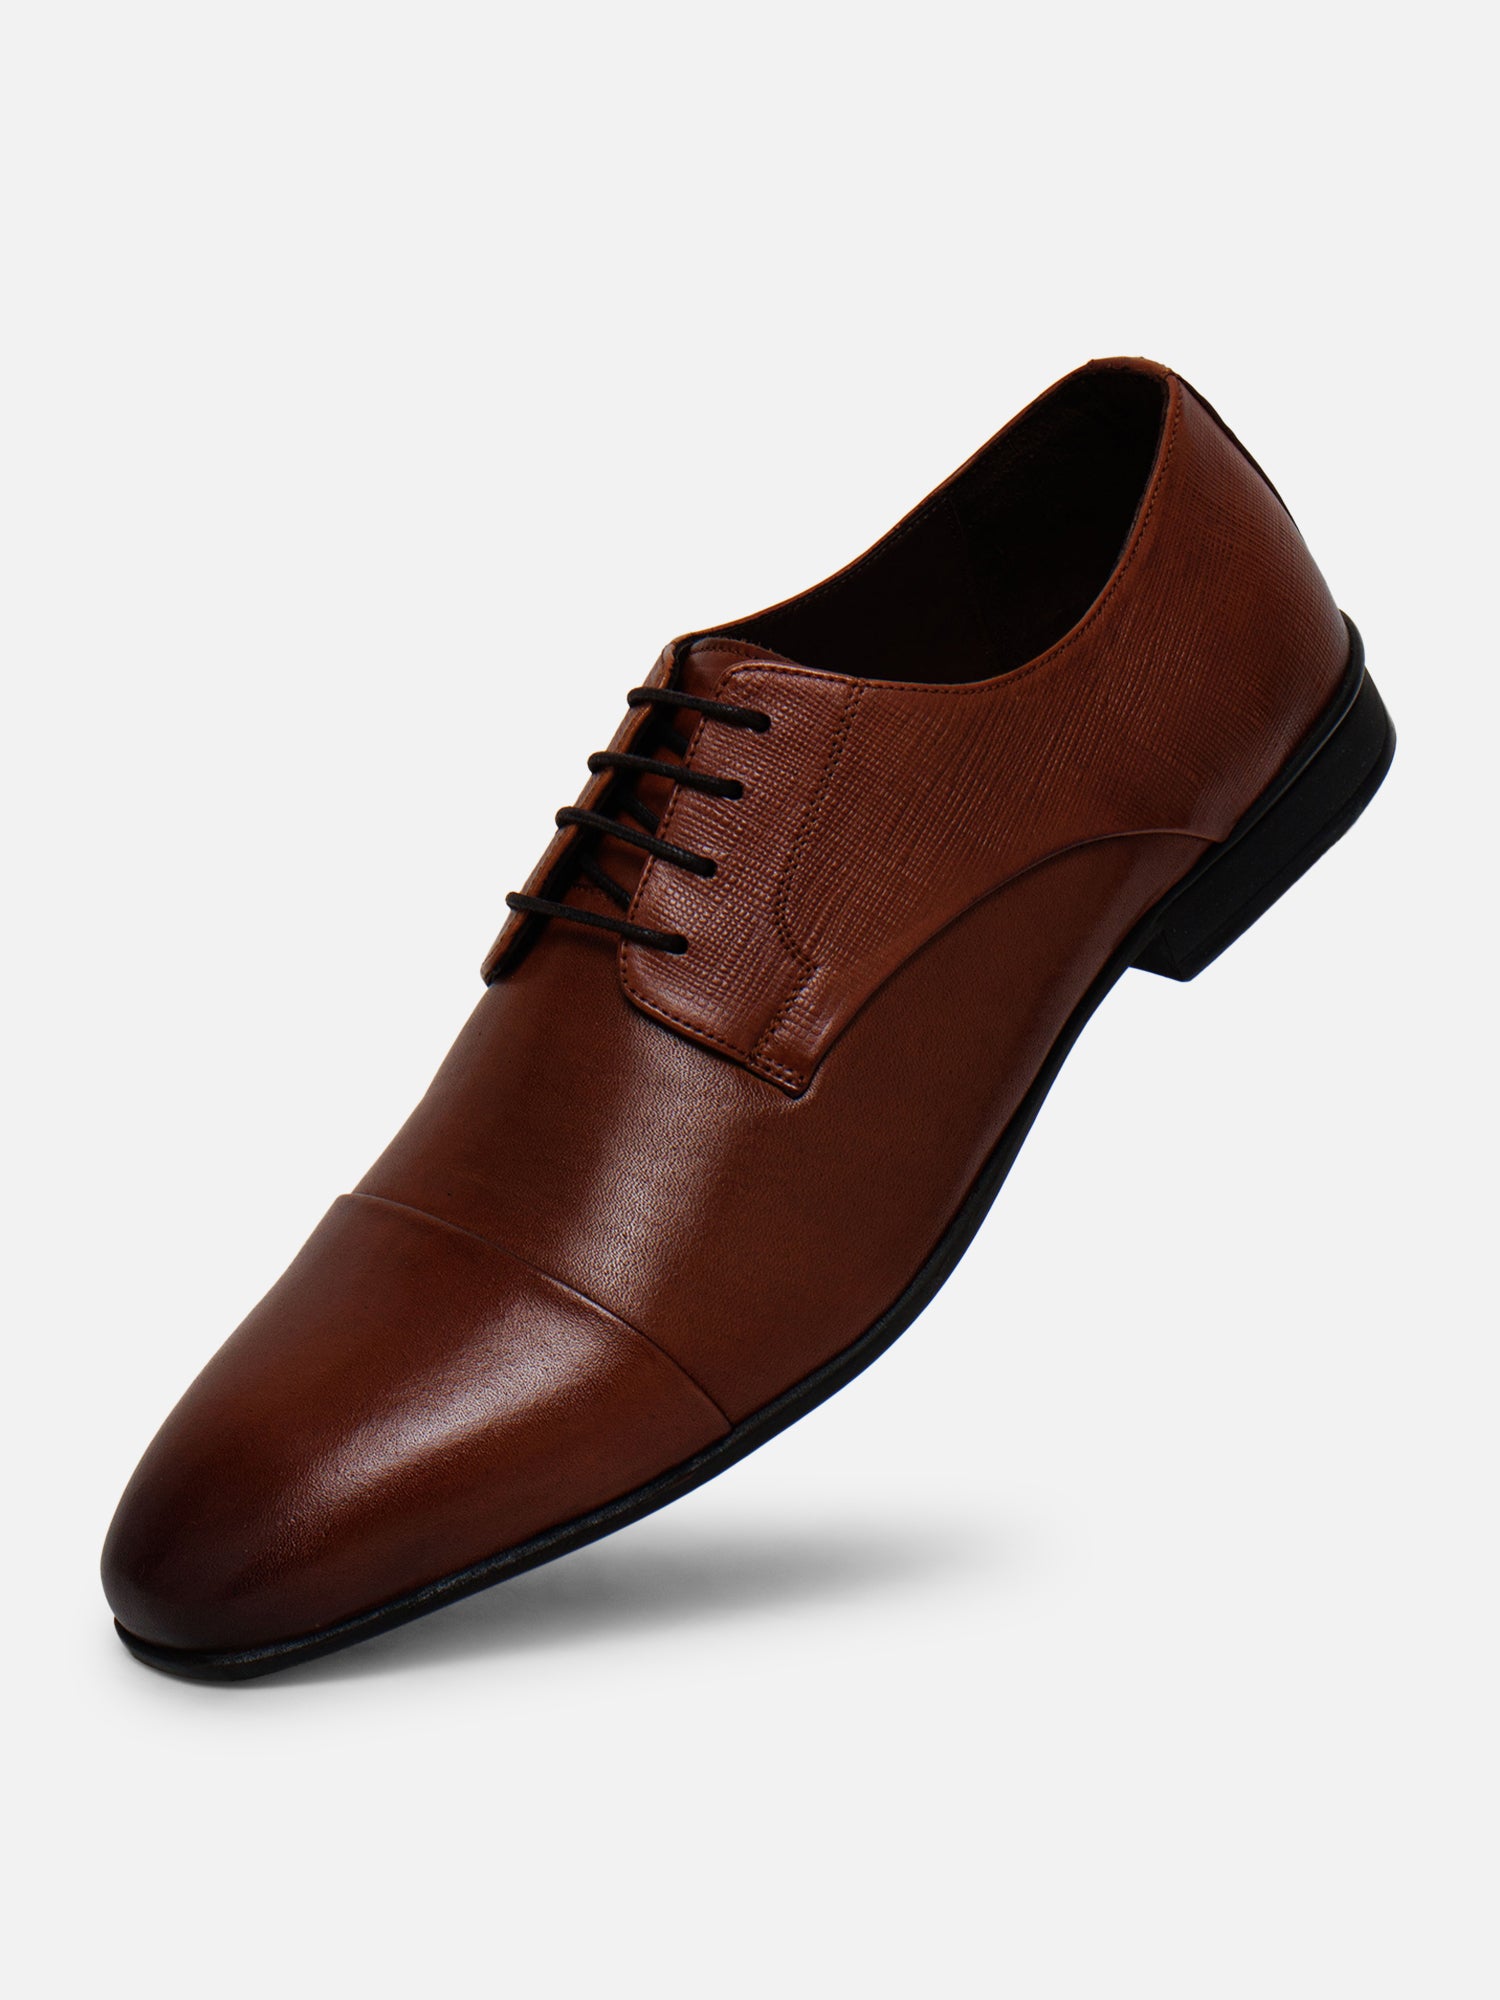 Ezok Formal Shoes For Men